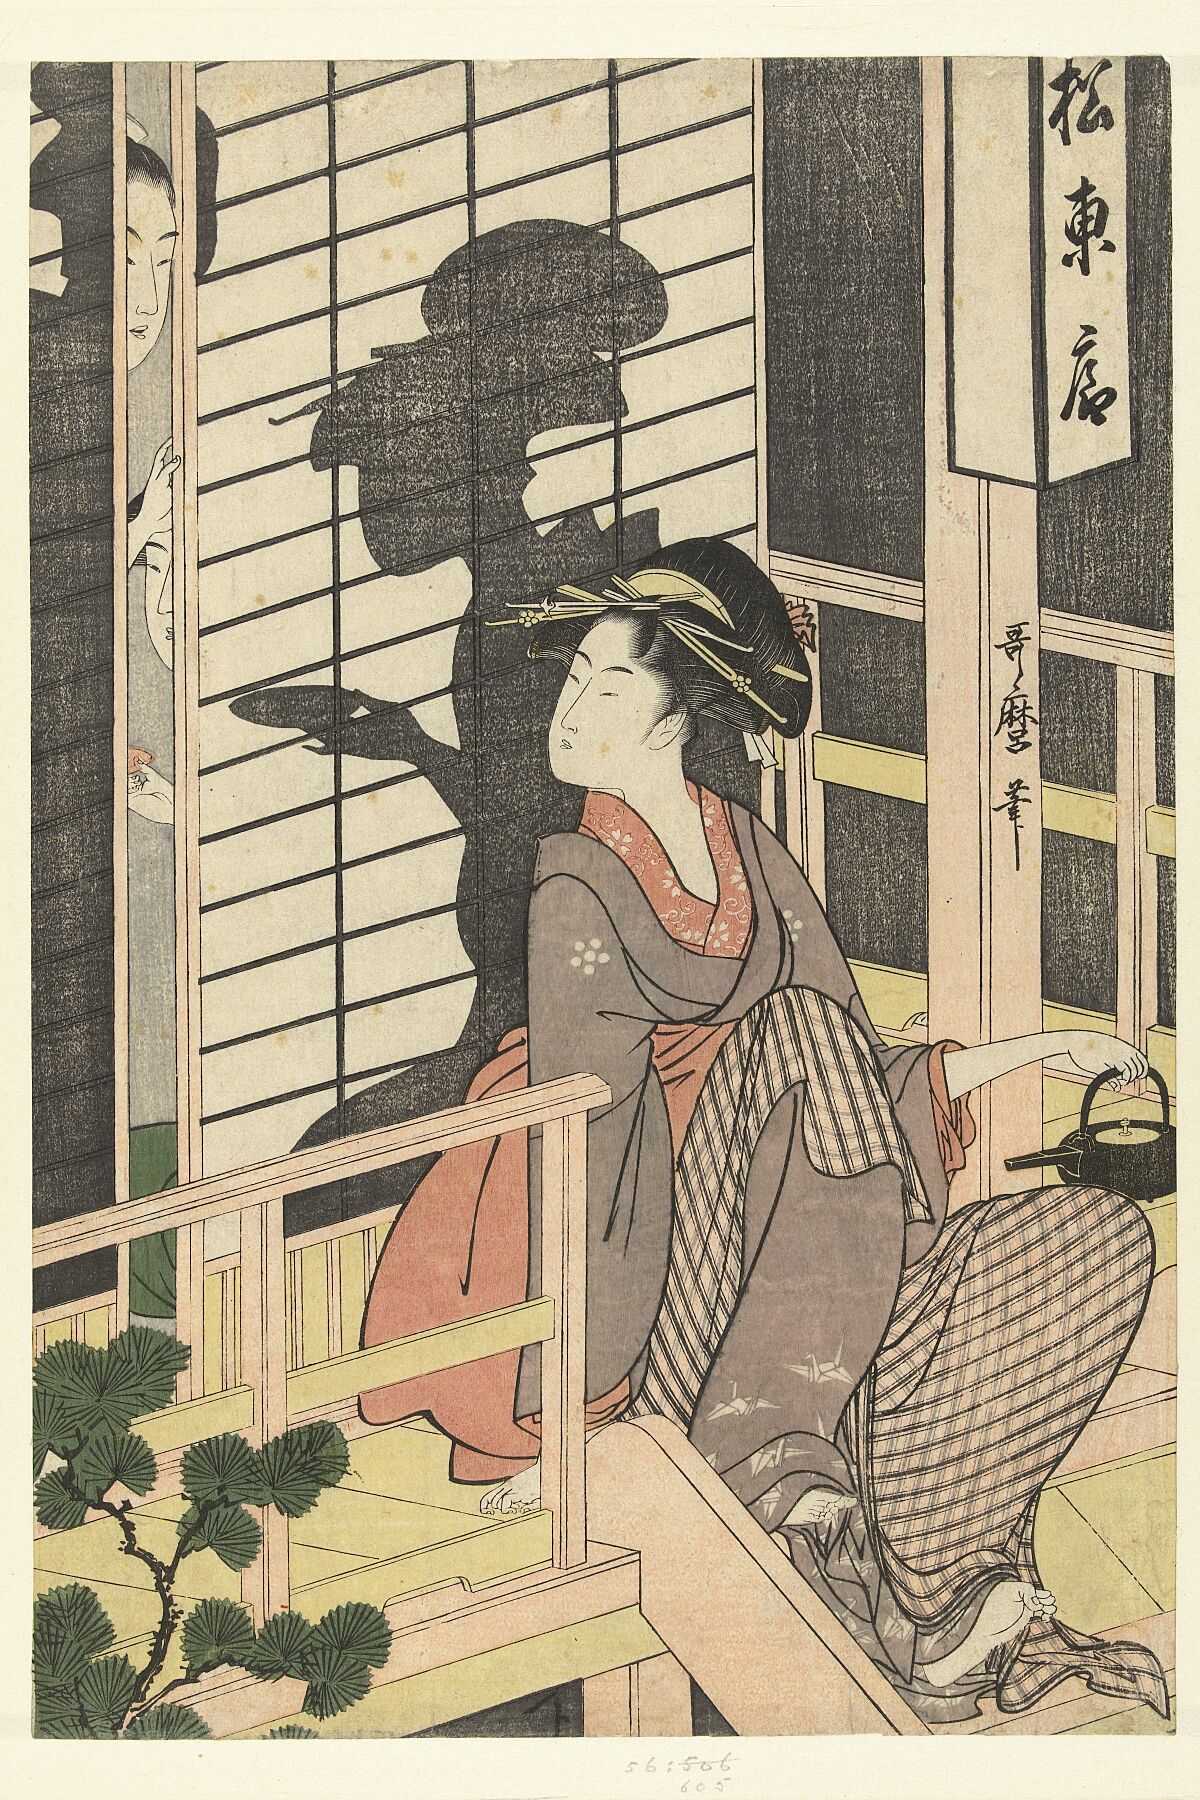 Waitress of the Matsu Higashiya Tea House, Kitagawa Utamaro, 1795 - 1800